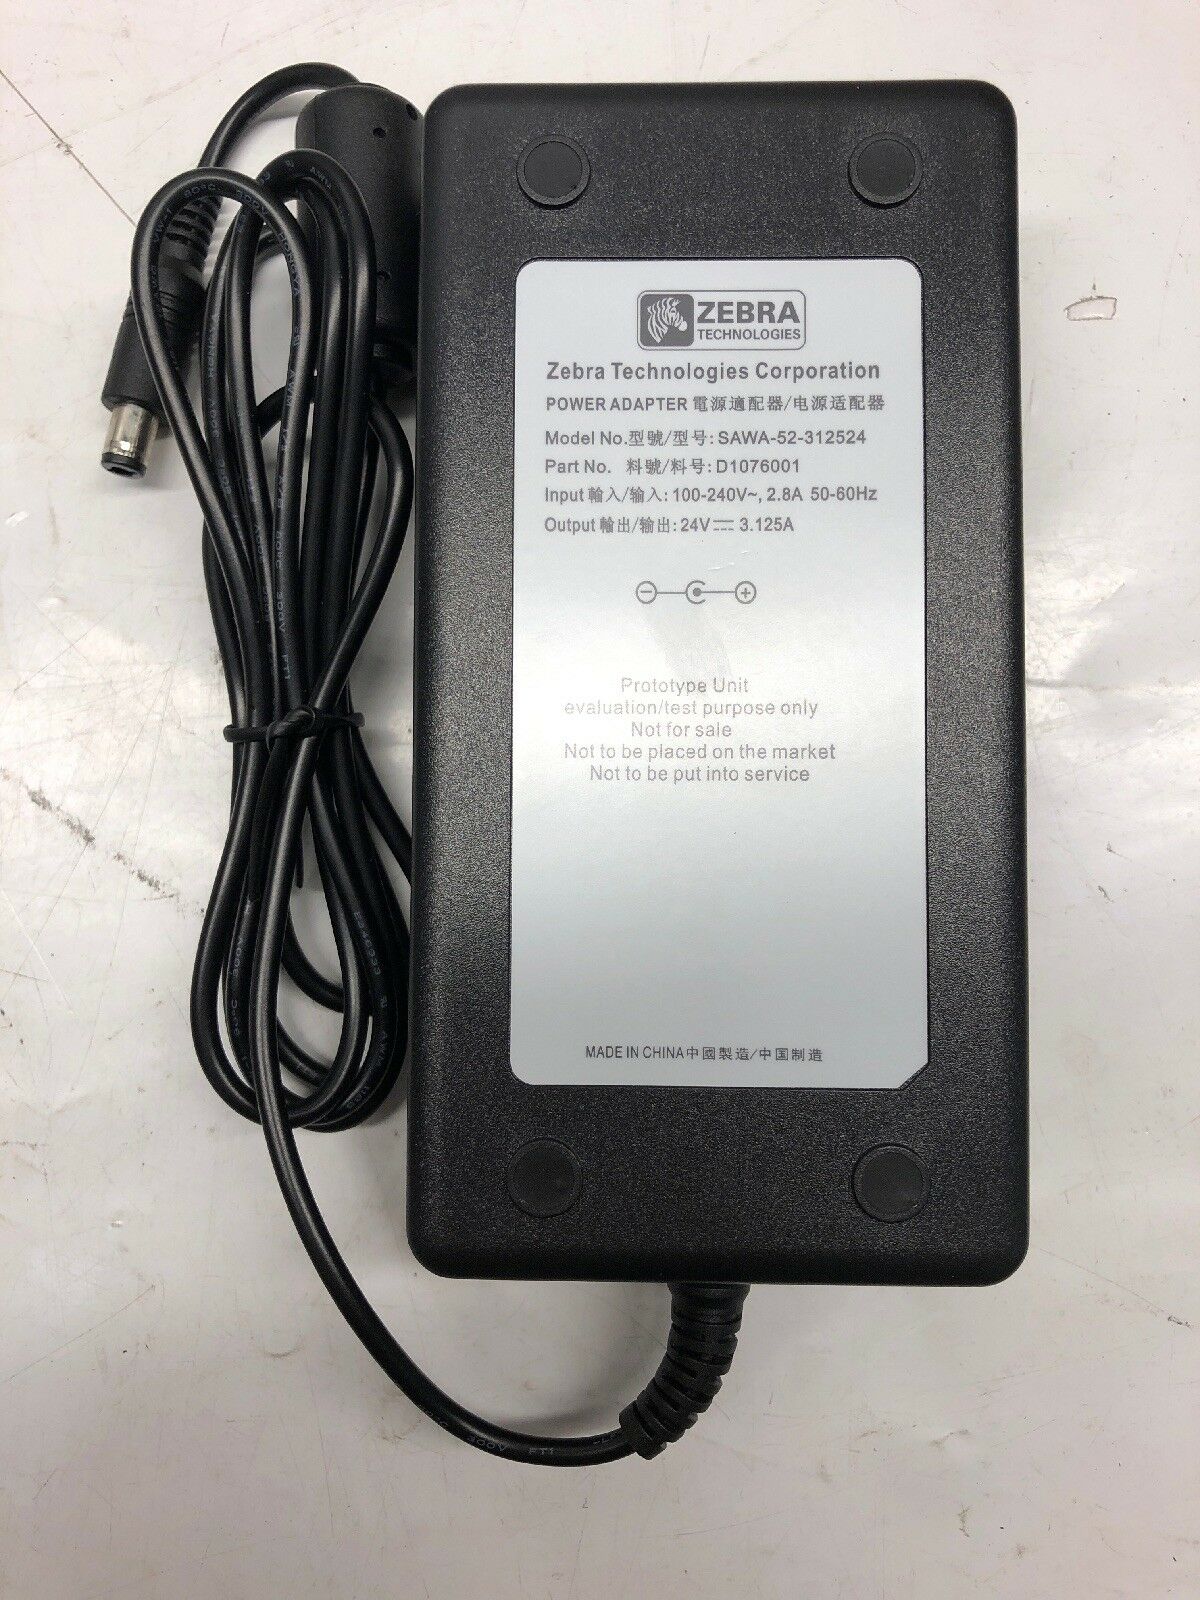 Zebra Thermal Printer Power Supply Adapter SAWA-52-312524 (output 24V-3.125A) Compatible Brand: For Zebra Compatib